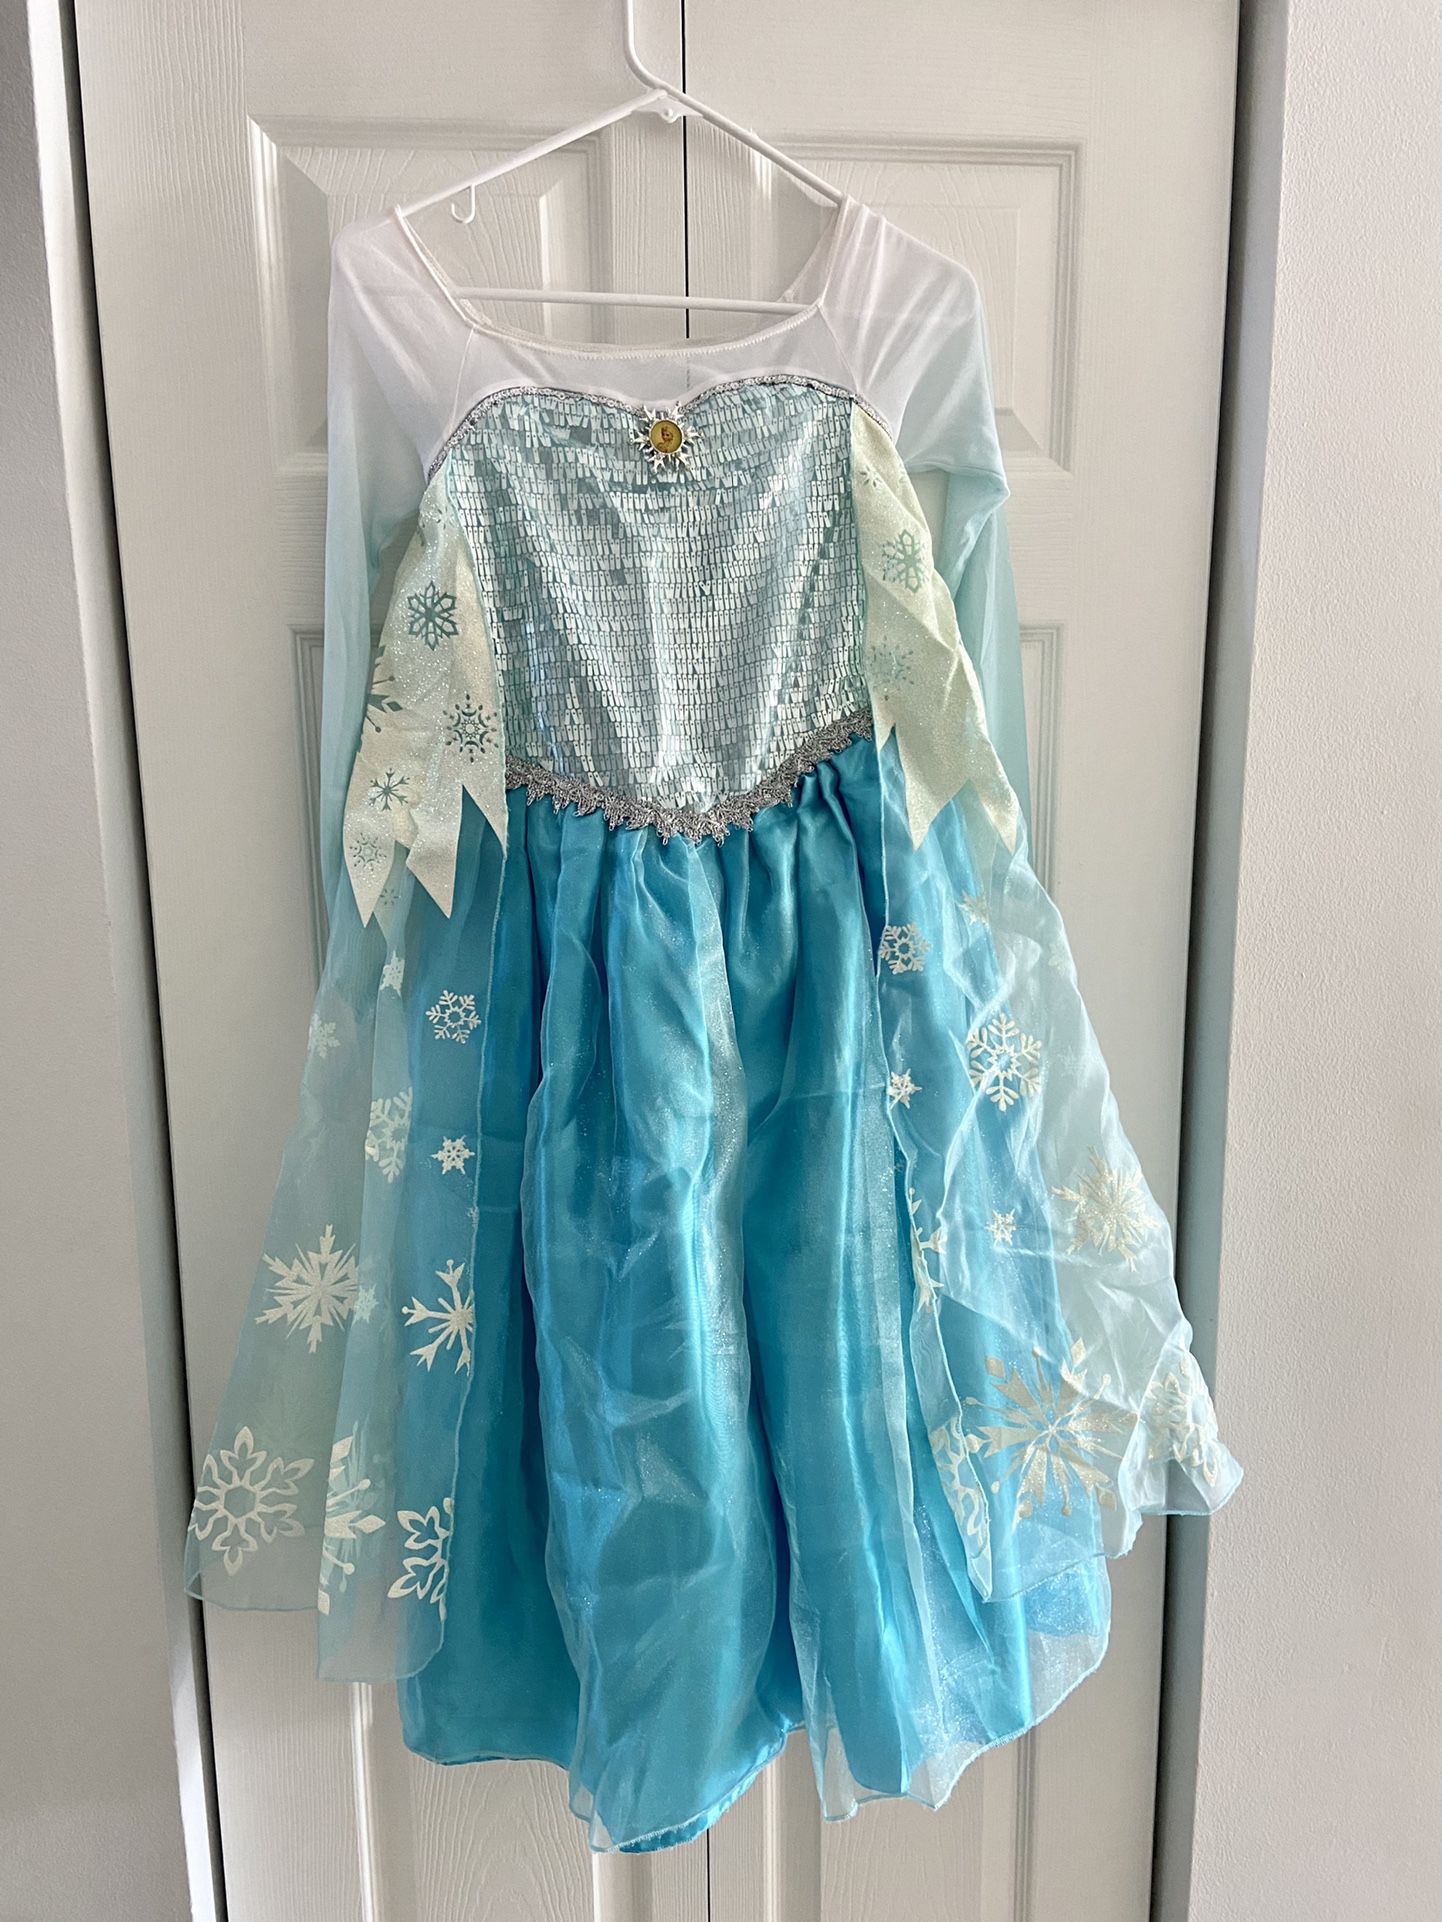 Elsa - Frozen Costume Dress & Crown ( Disney Store) Kid Size 9/10